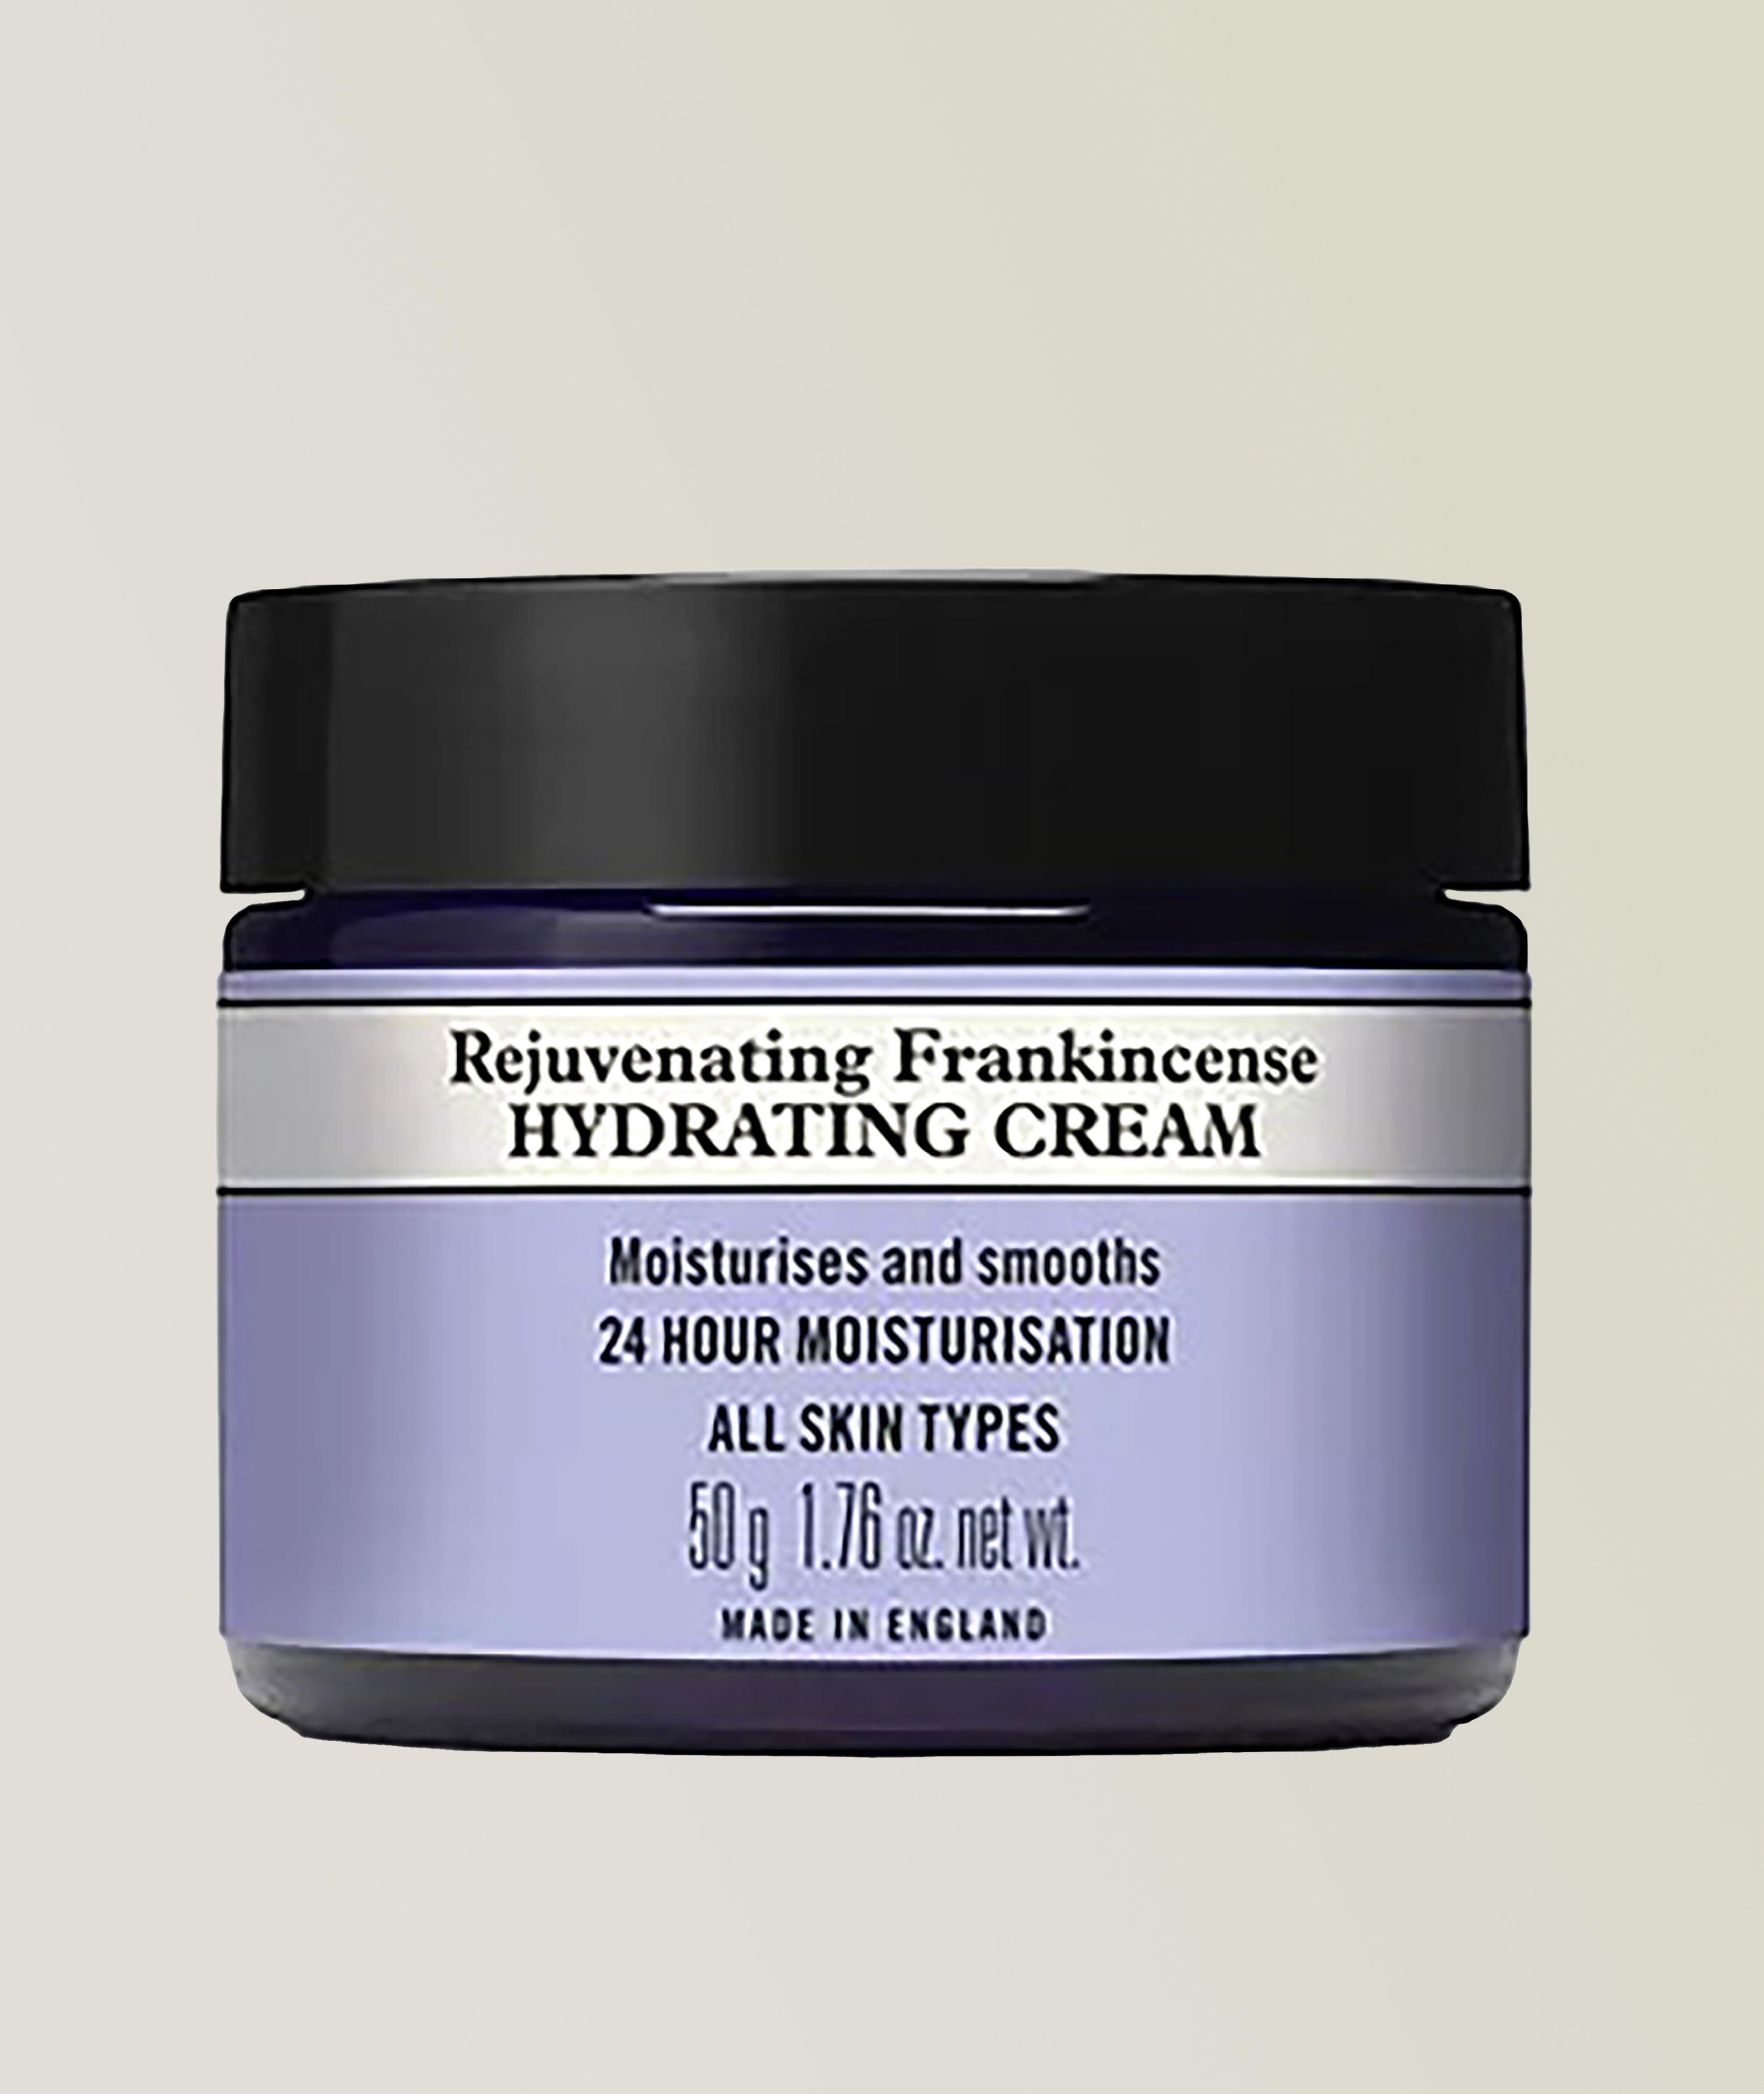  Frankincense Hydrating Cream image 0